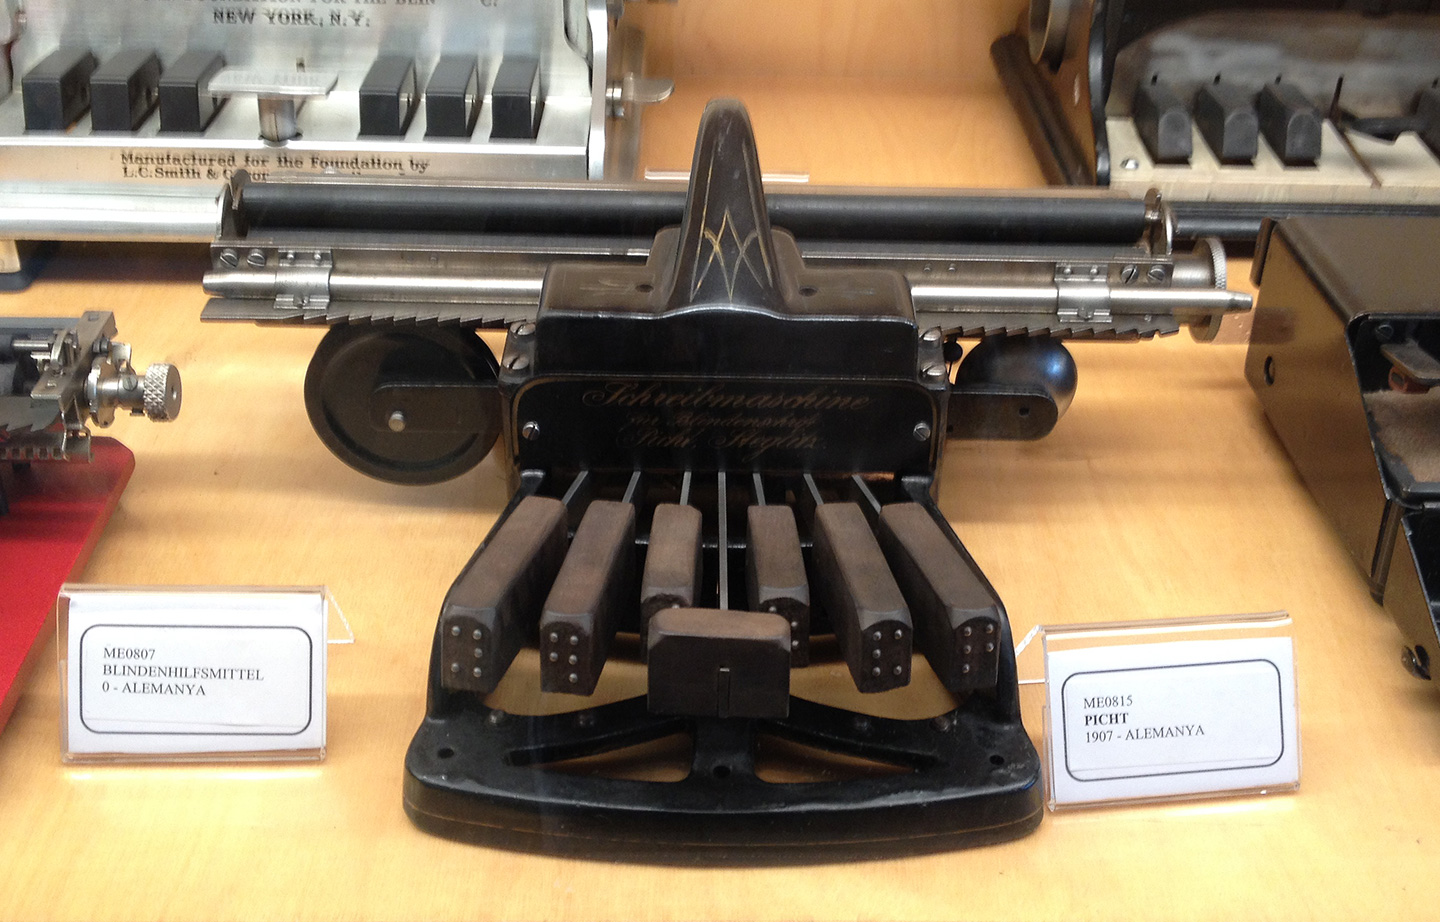 Pitch Braille typewriter from 1907